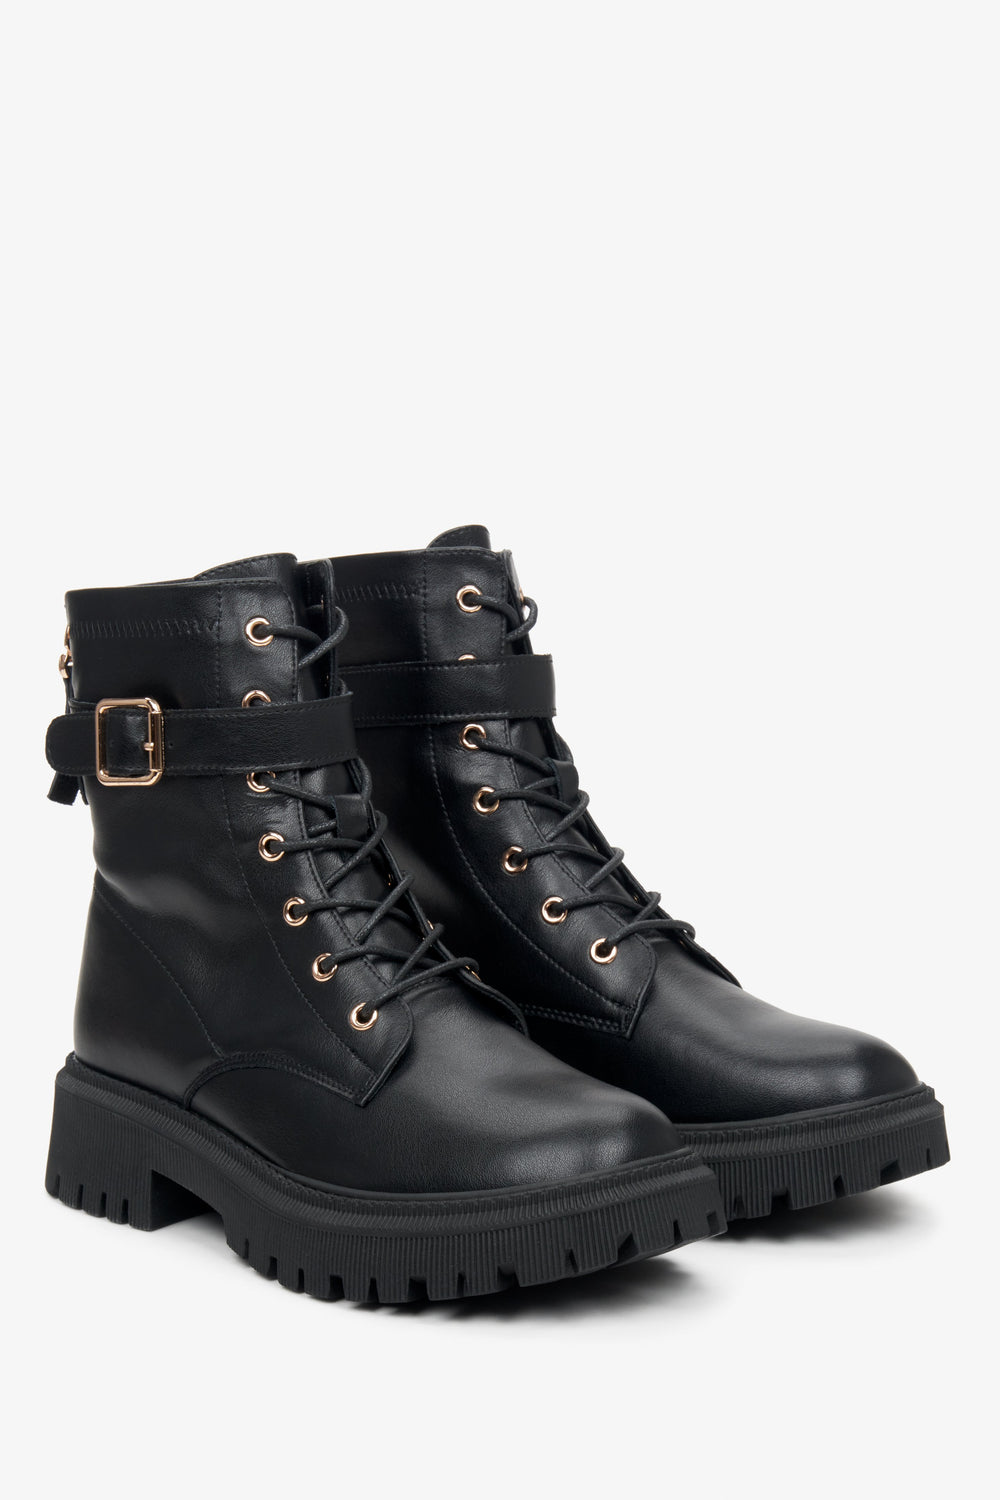 Black leather women's ankle boots, versatile for all seasons, Estro brand.